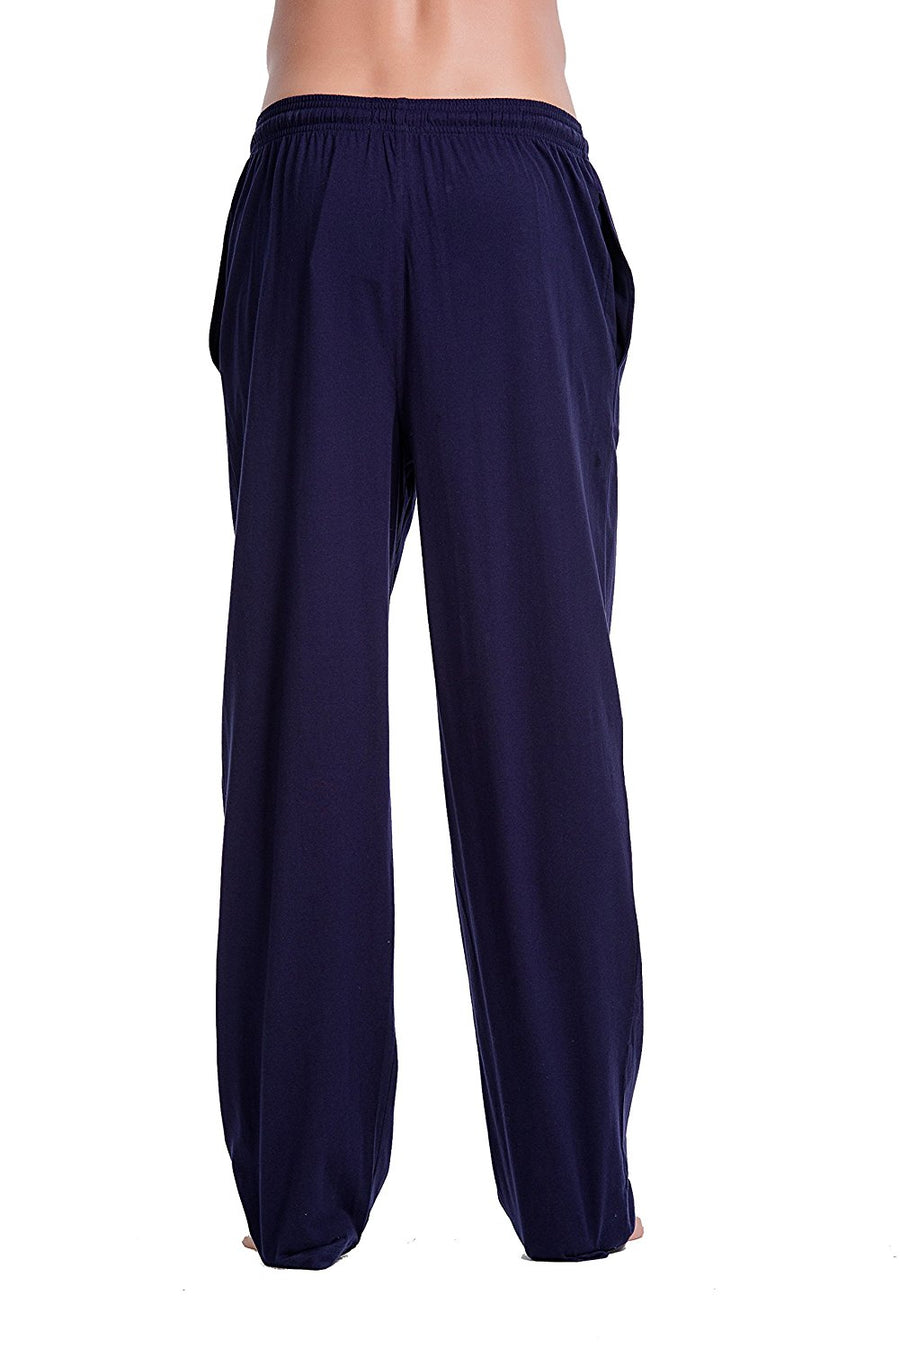 CYZ Men's 100% Cotton Jersey Knit Pajama Pants/Lounge Pants With